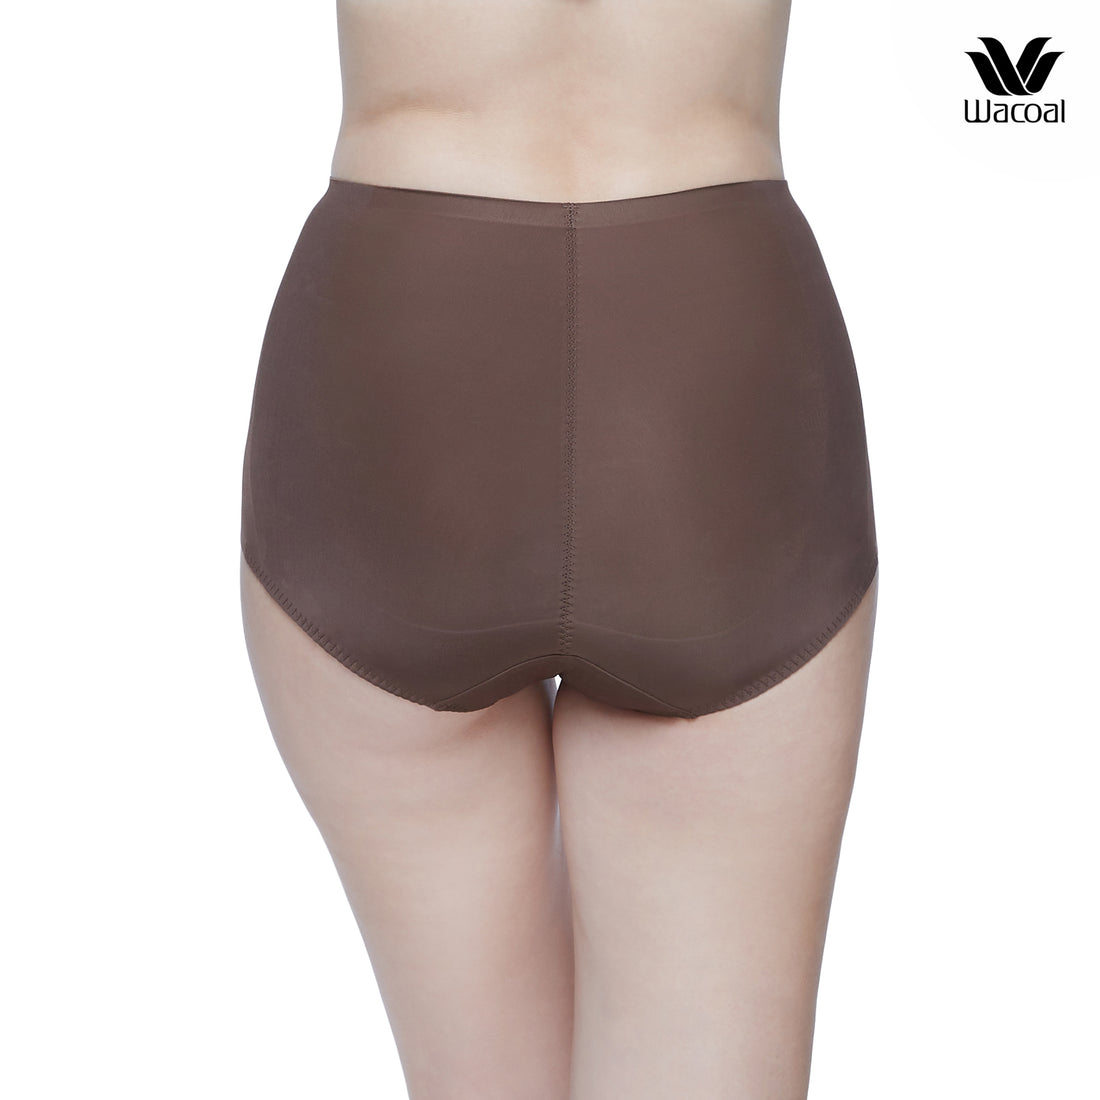 Wacoal Shape Beautifier Hips compression pants, model WY1616, burnt brown (BT)